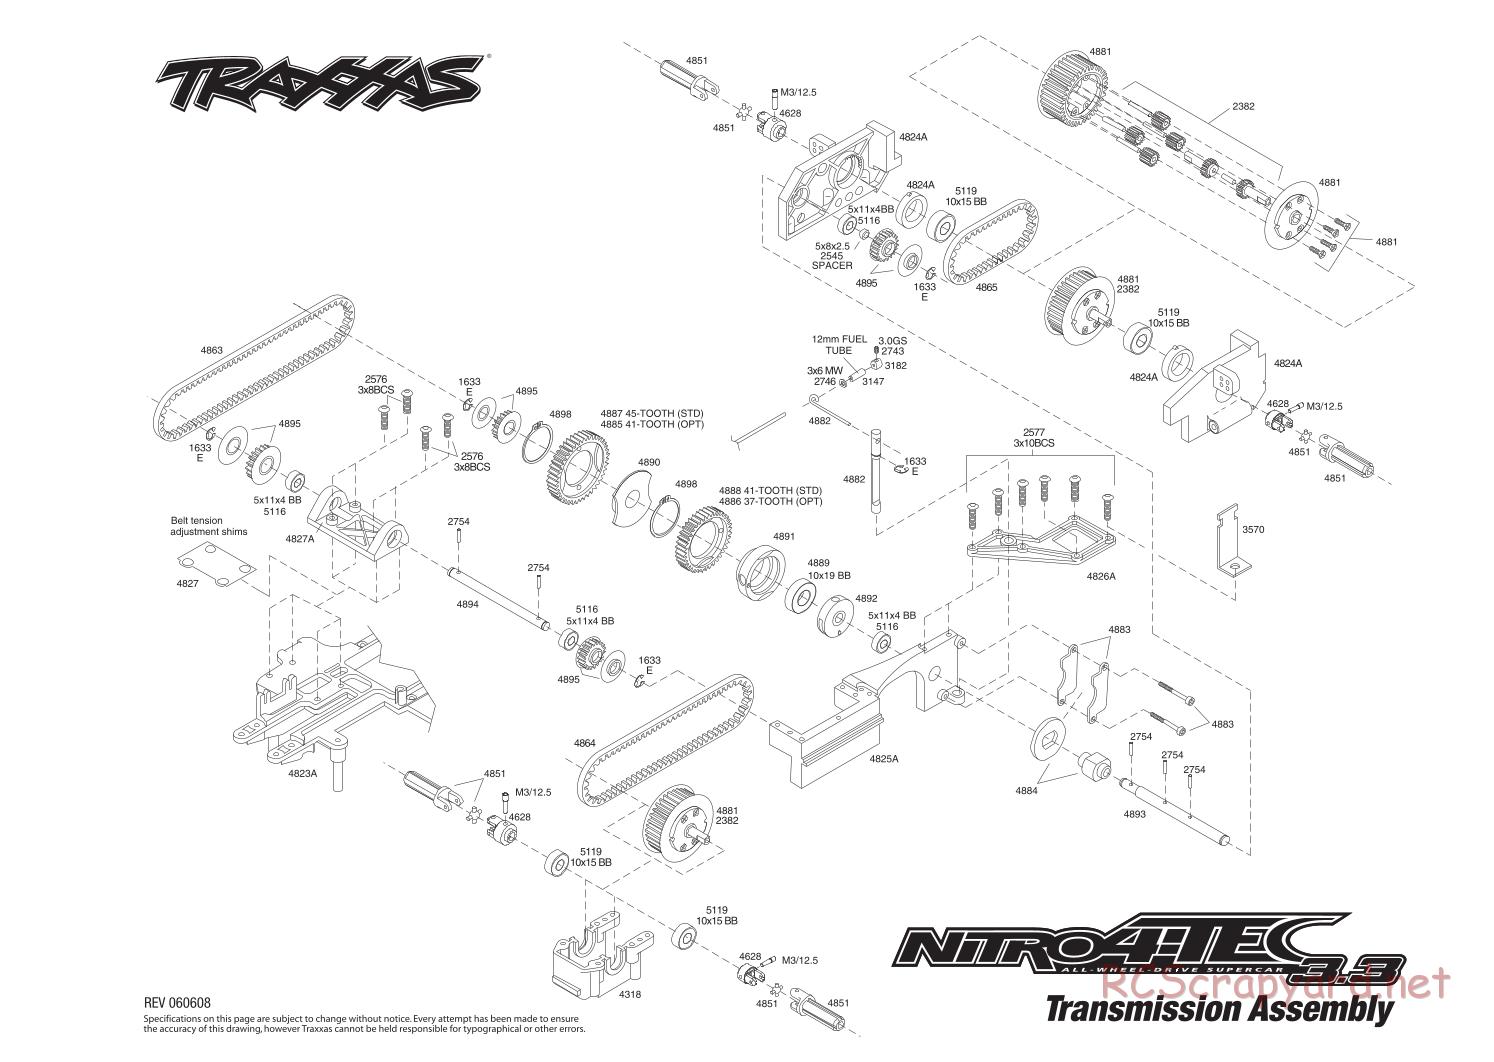 Traxxas - Nitro 4-Tec 3.3 (2006) - Exploded Views - Page 4